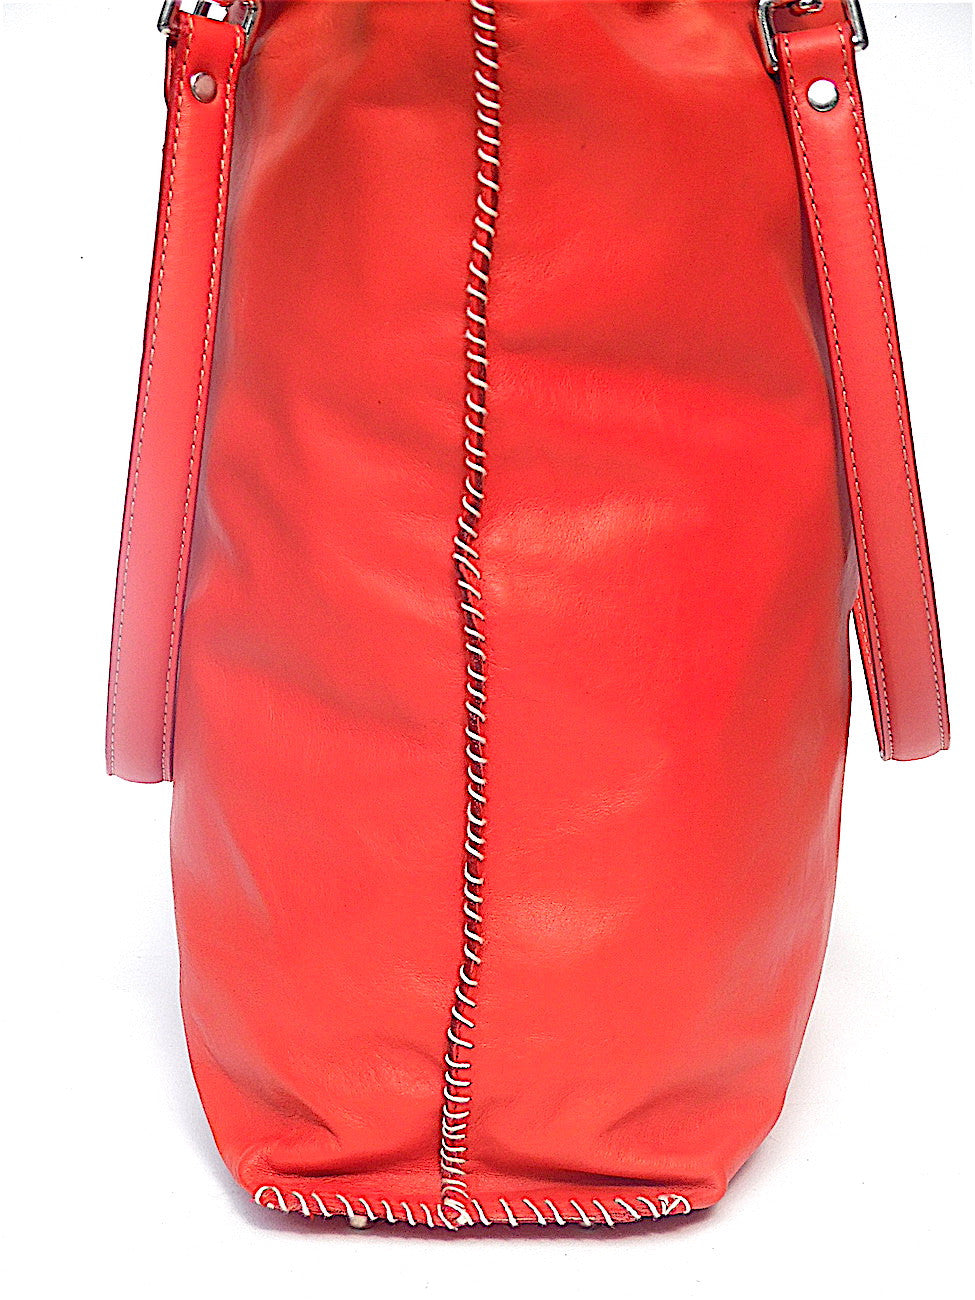 Gajumbo Tote Bag Napa Leather Red